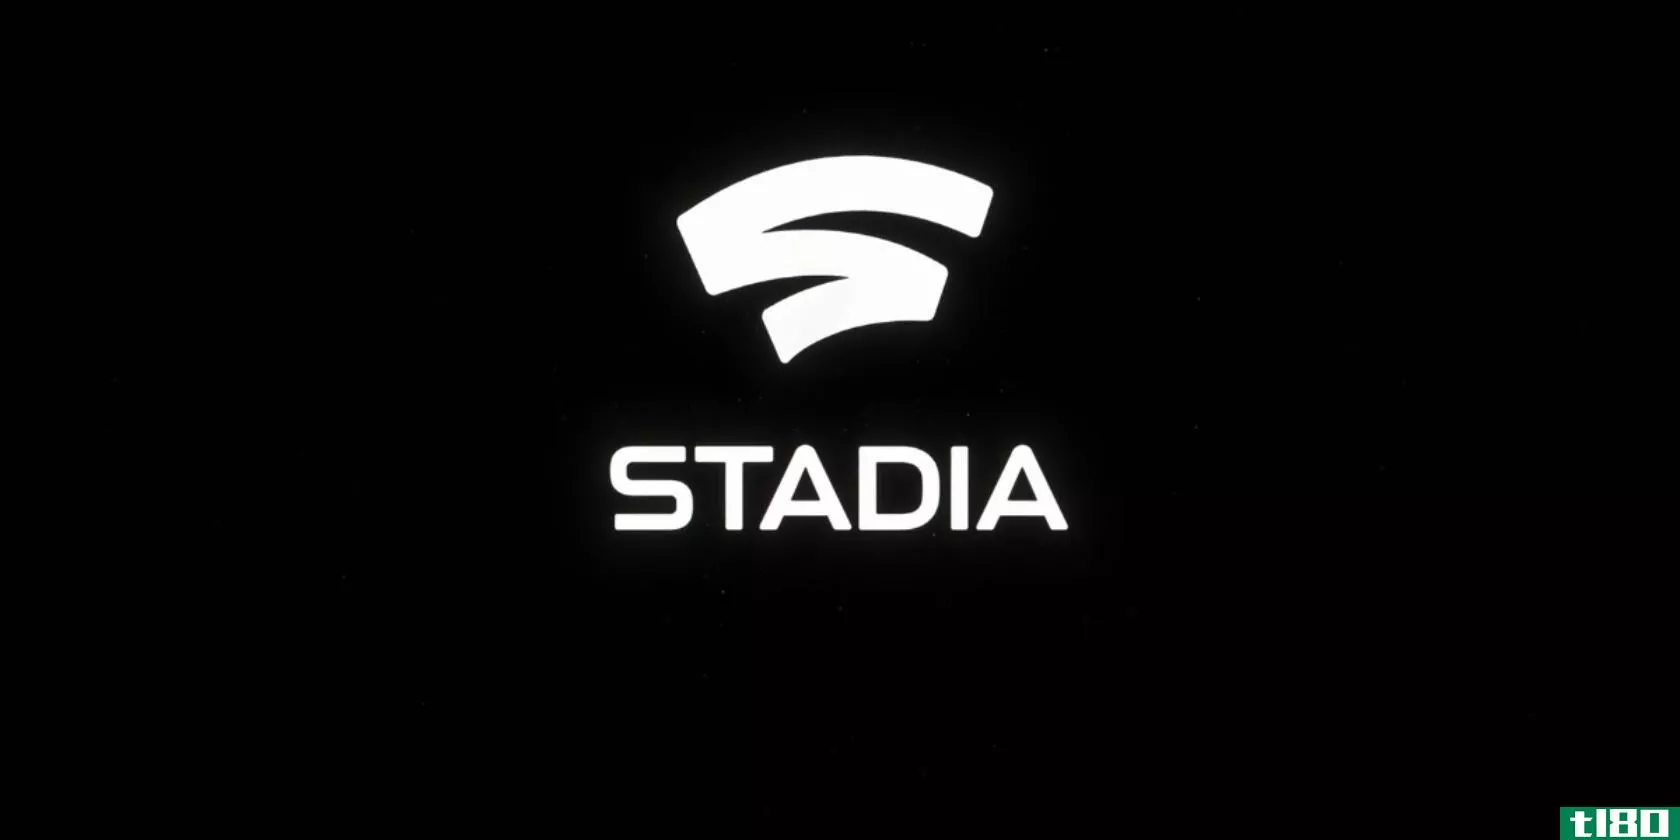 stadia logo